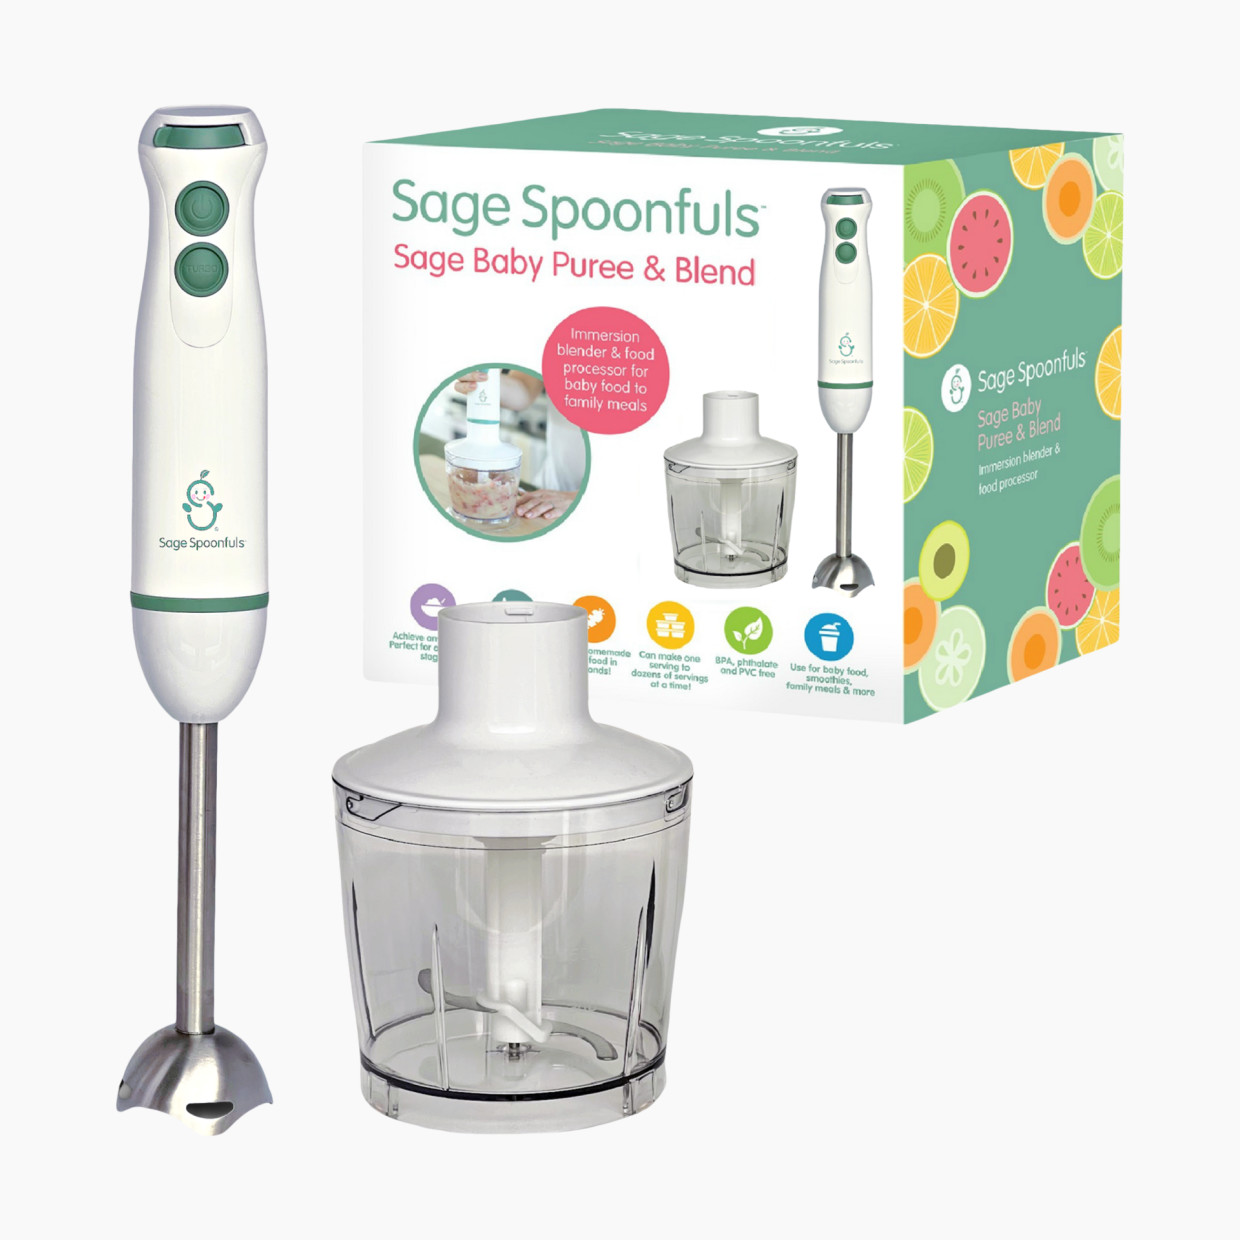 Sage Spoonfuls Sage Baby Puree & Blend Baby Food Maker - White.